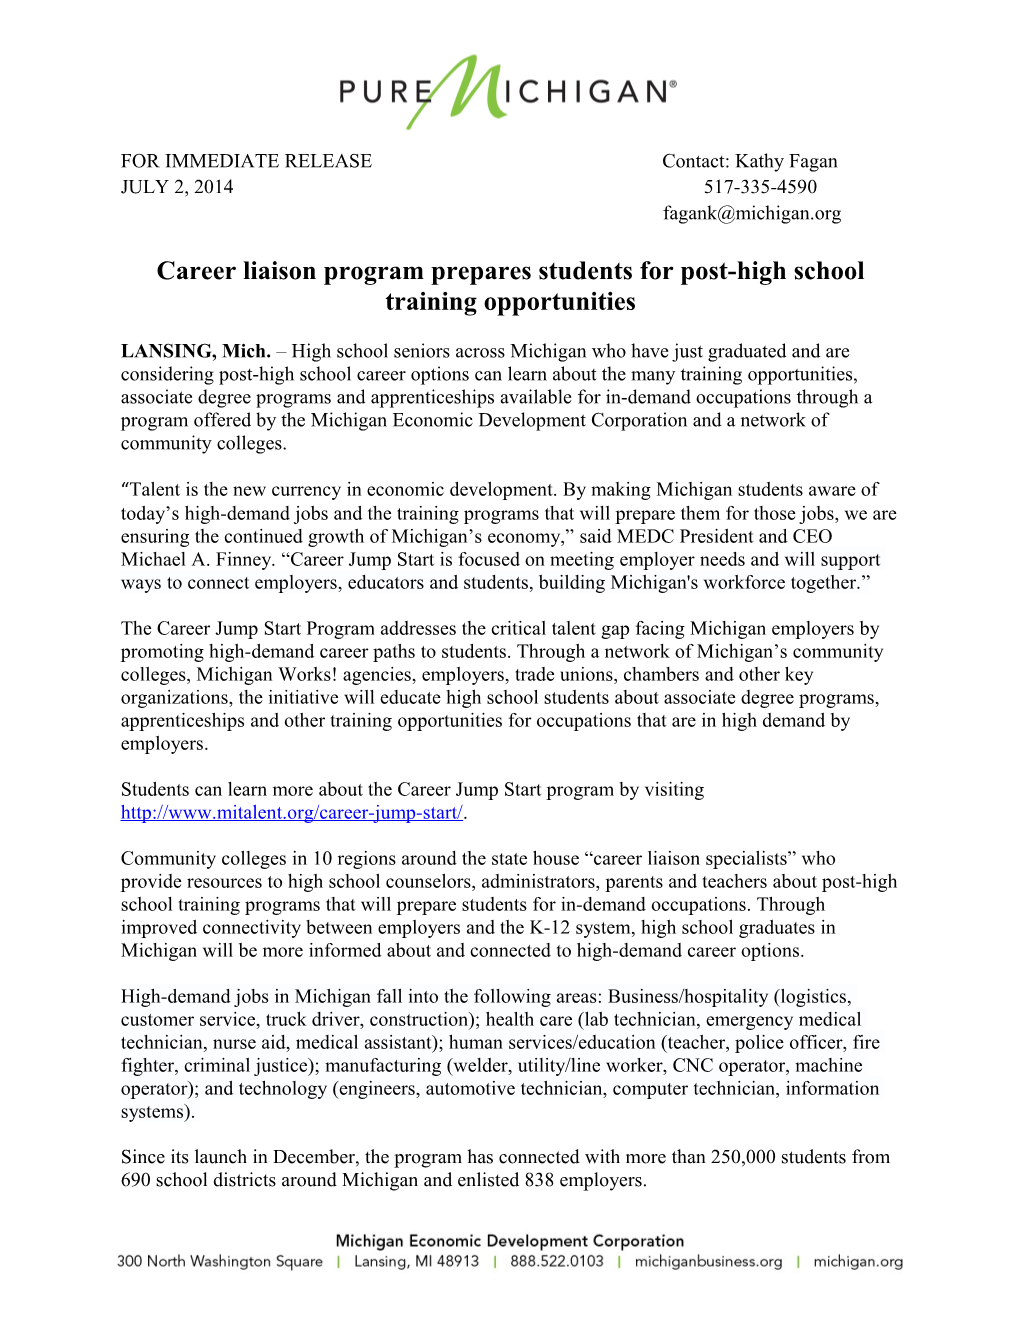 Career Liaison Program Prepares Students for Post-High School Training Opportunities